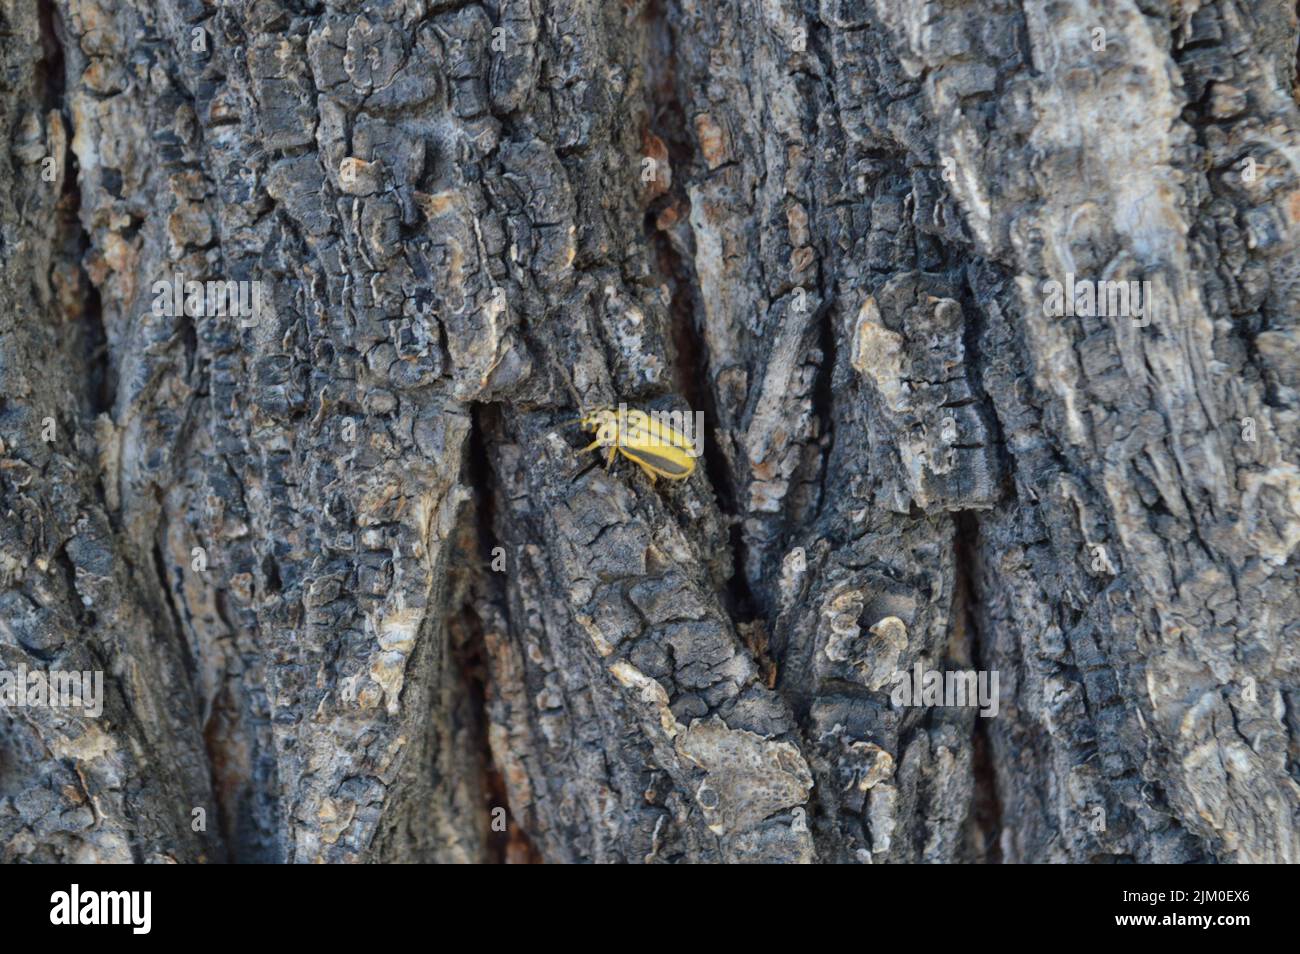 A striped yellow beetle climbing on a tree Stock Photo